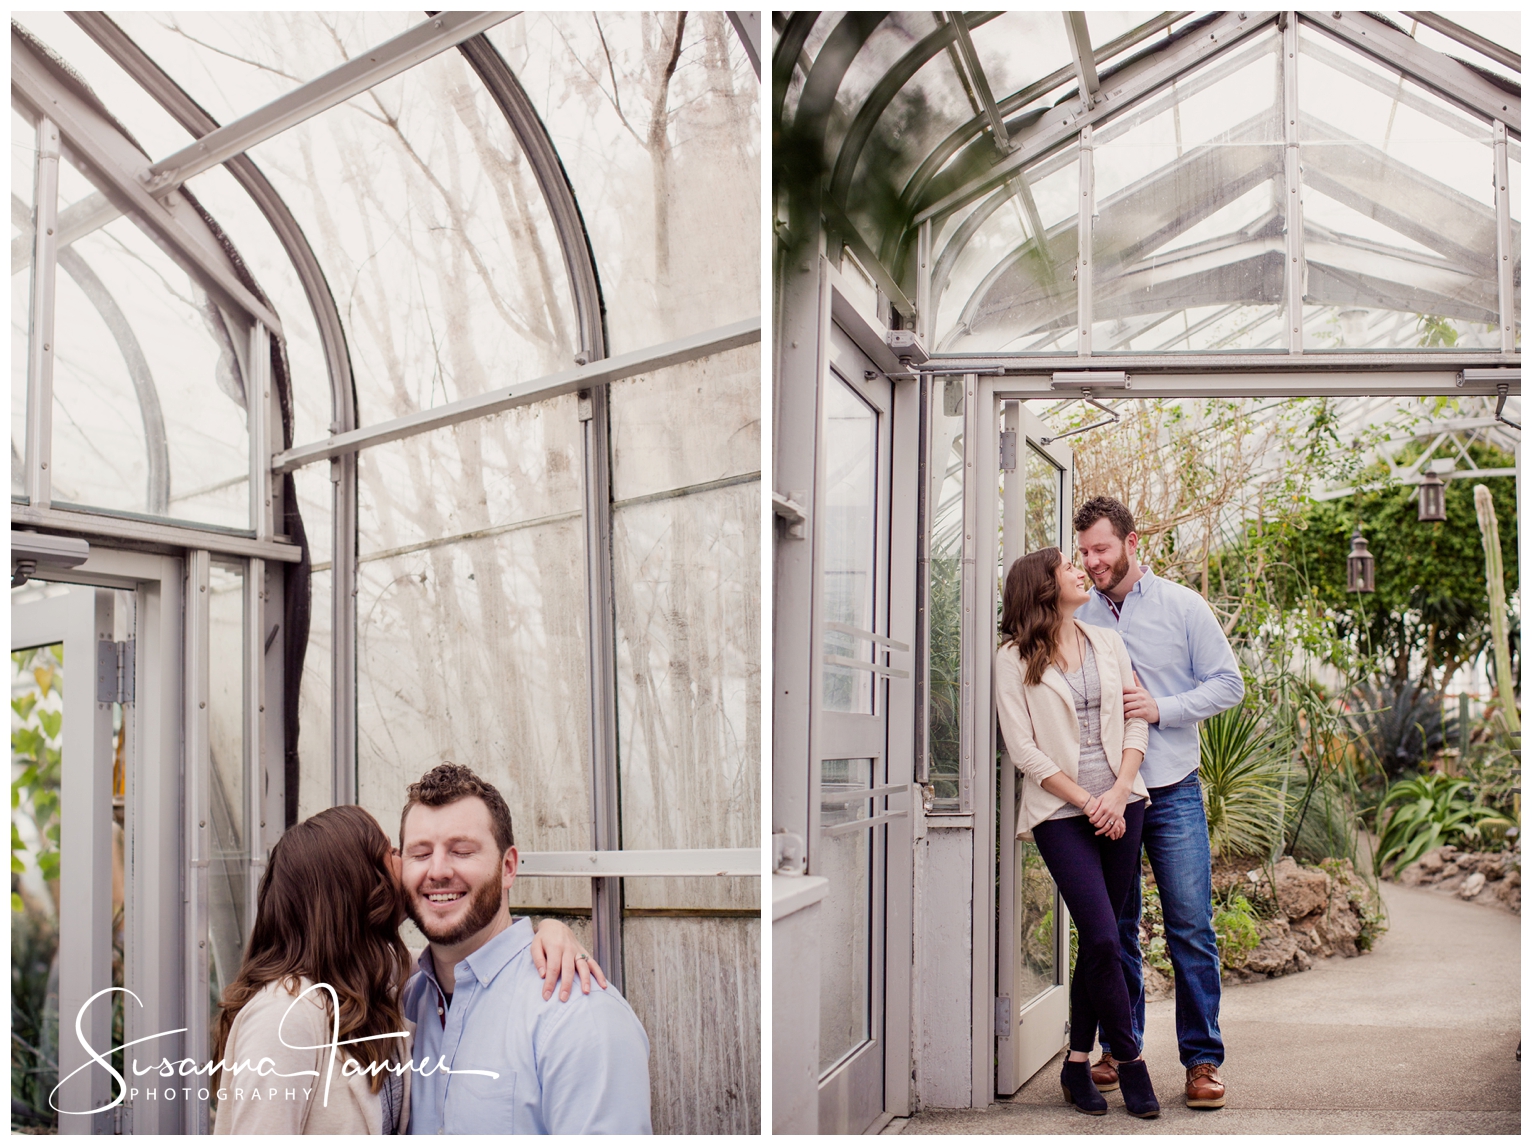 Cincinnati Krohn Conservatory Engagement Photography, couple share in closeness in doorway of greenhouse room